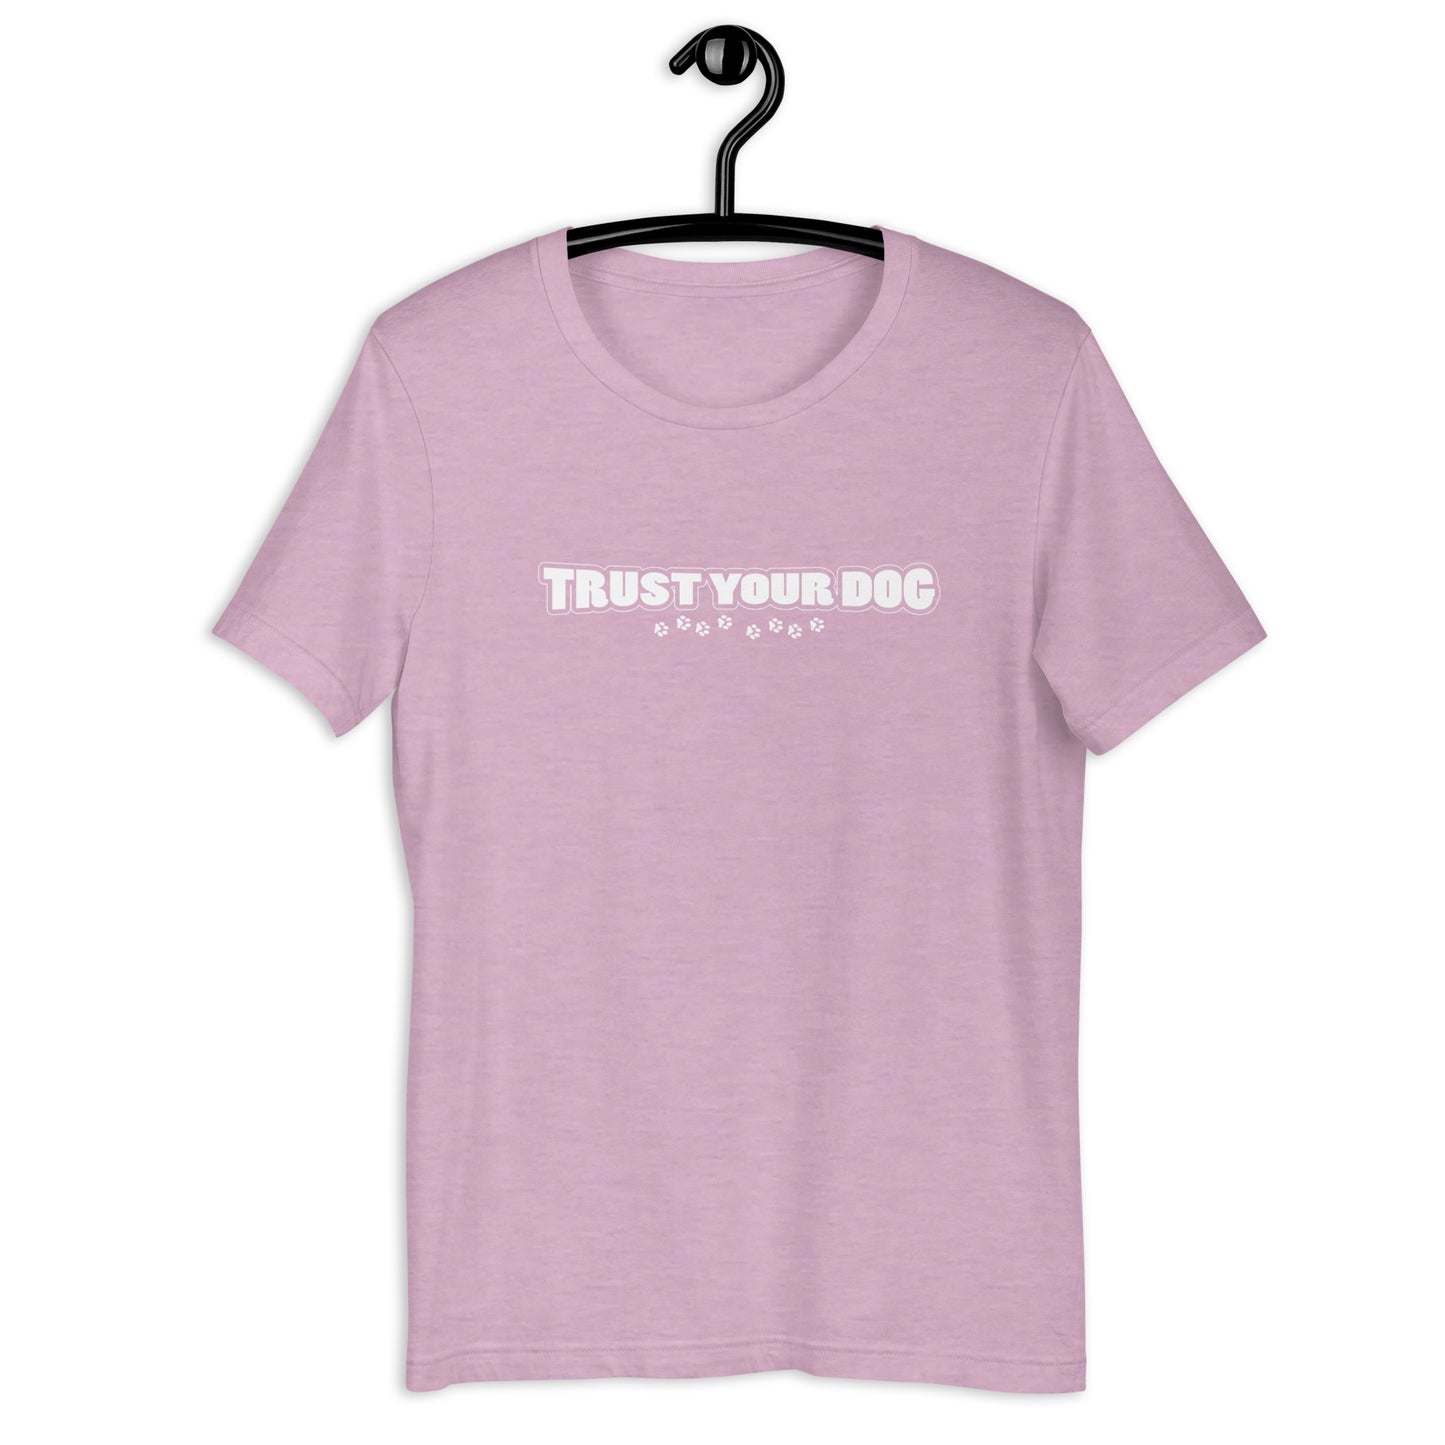 TRUST YOUR DOG - Unisex t-shirt